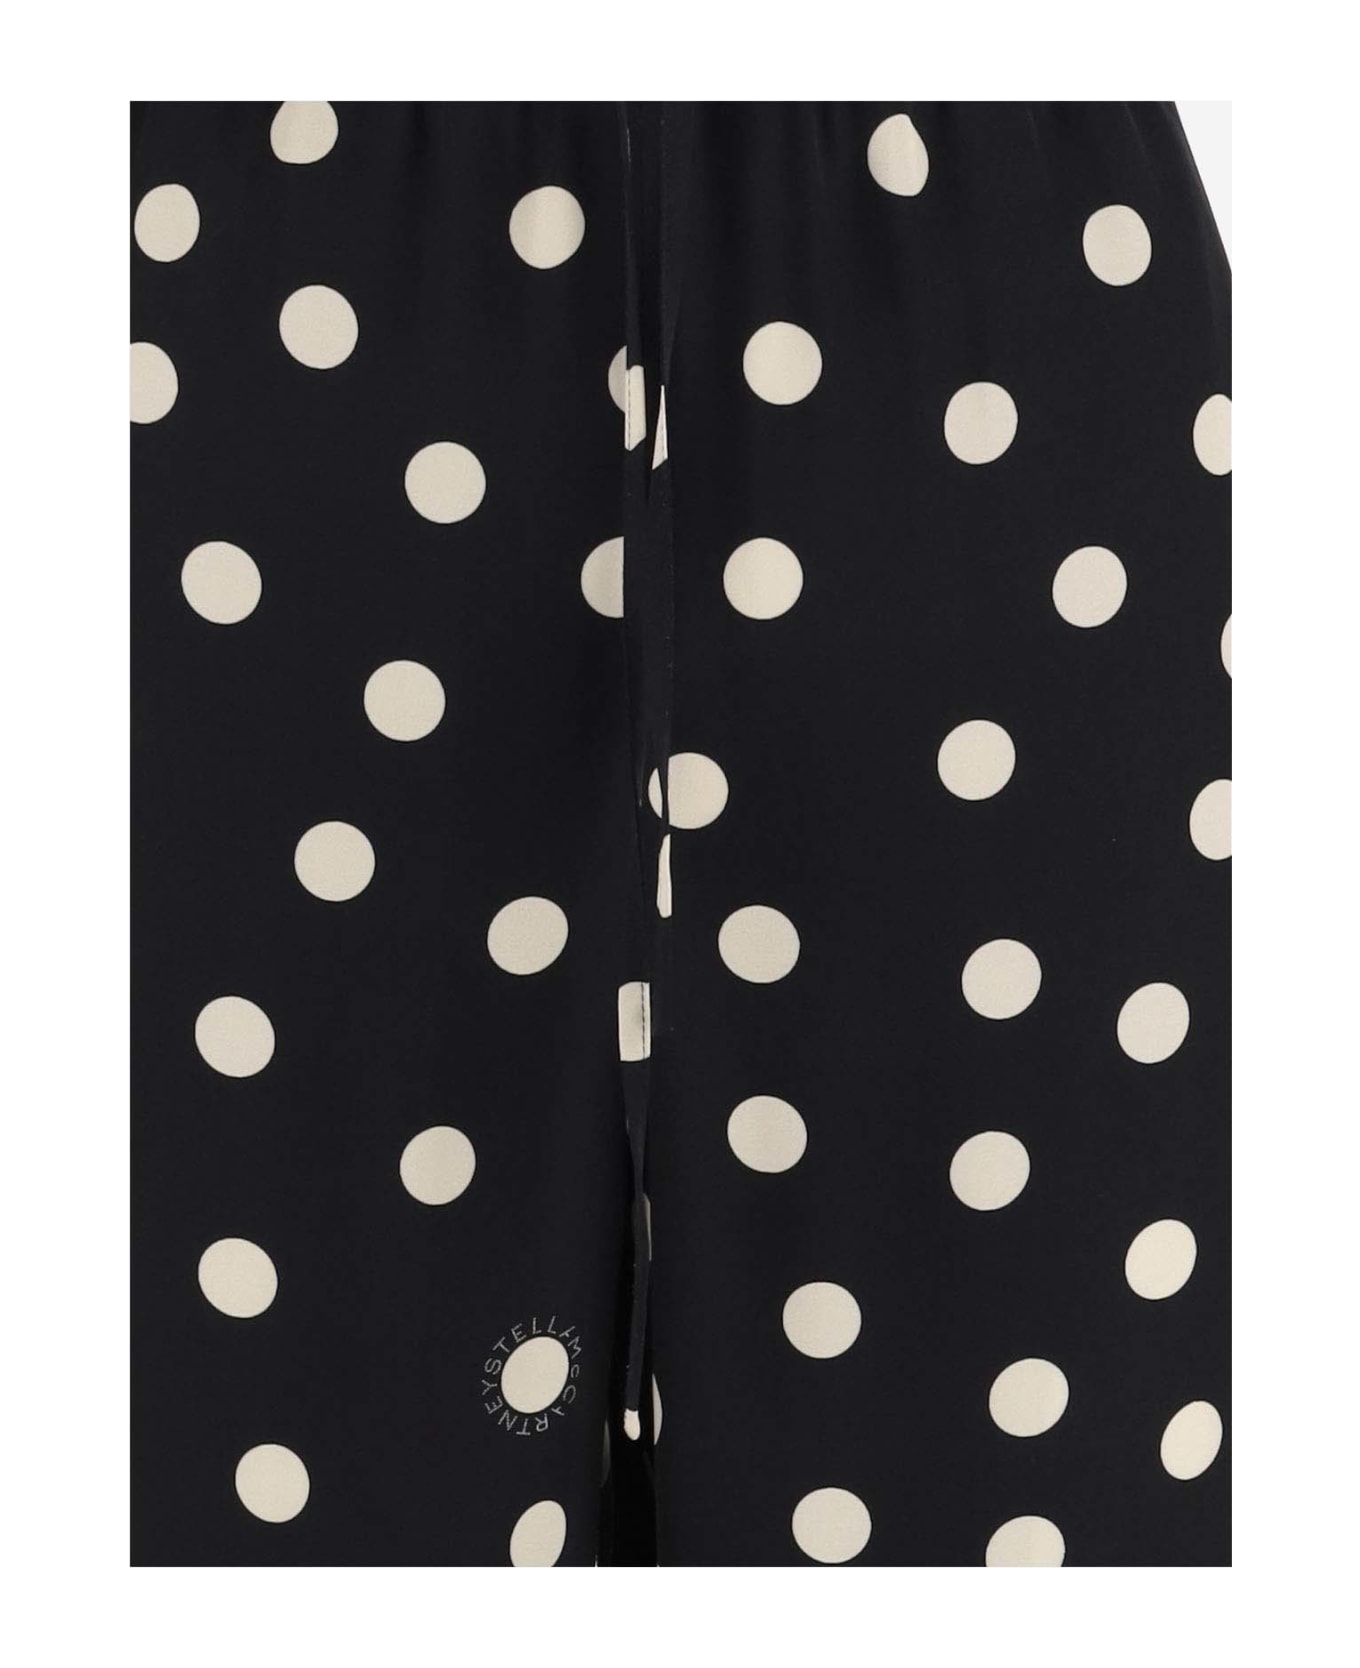 Stella McCartney Pants With Polka Dot Pattern - Black